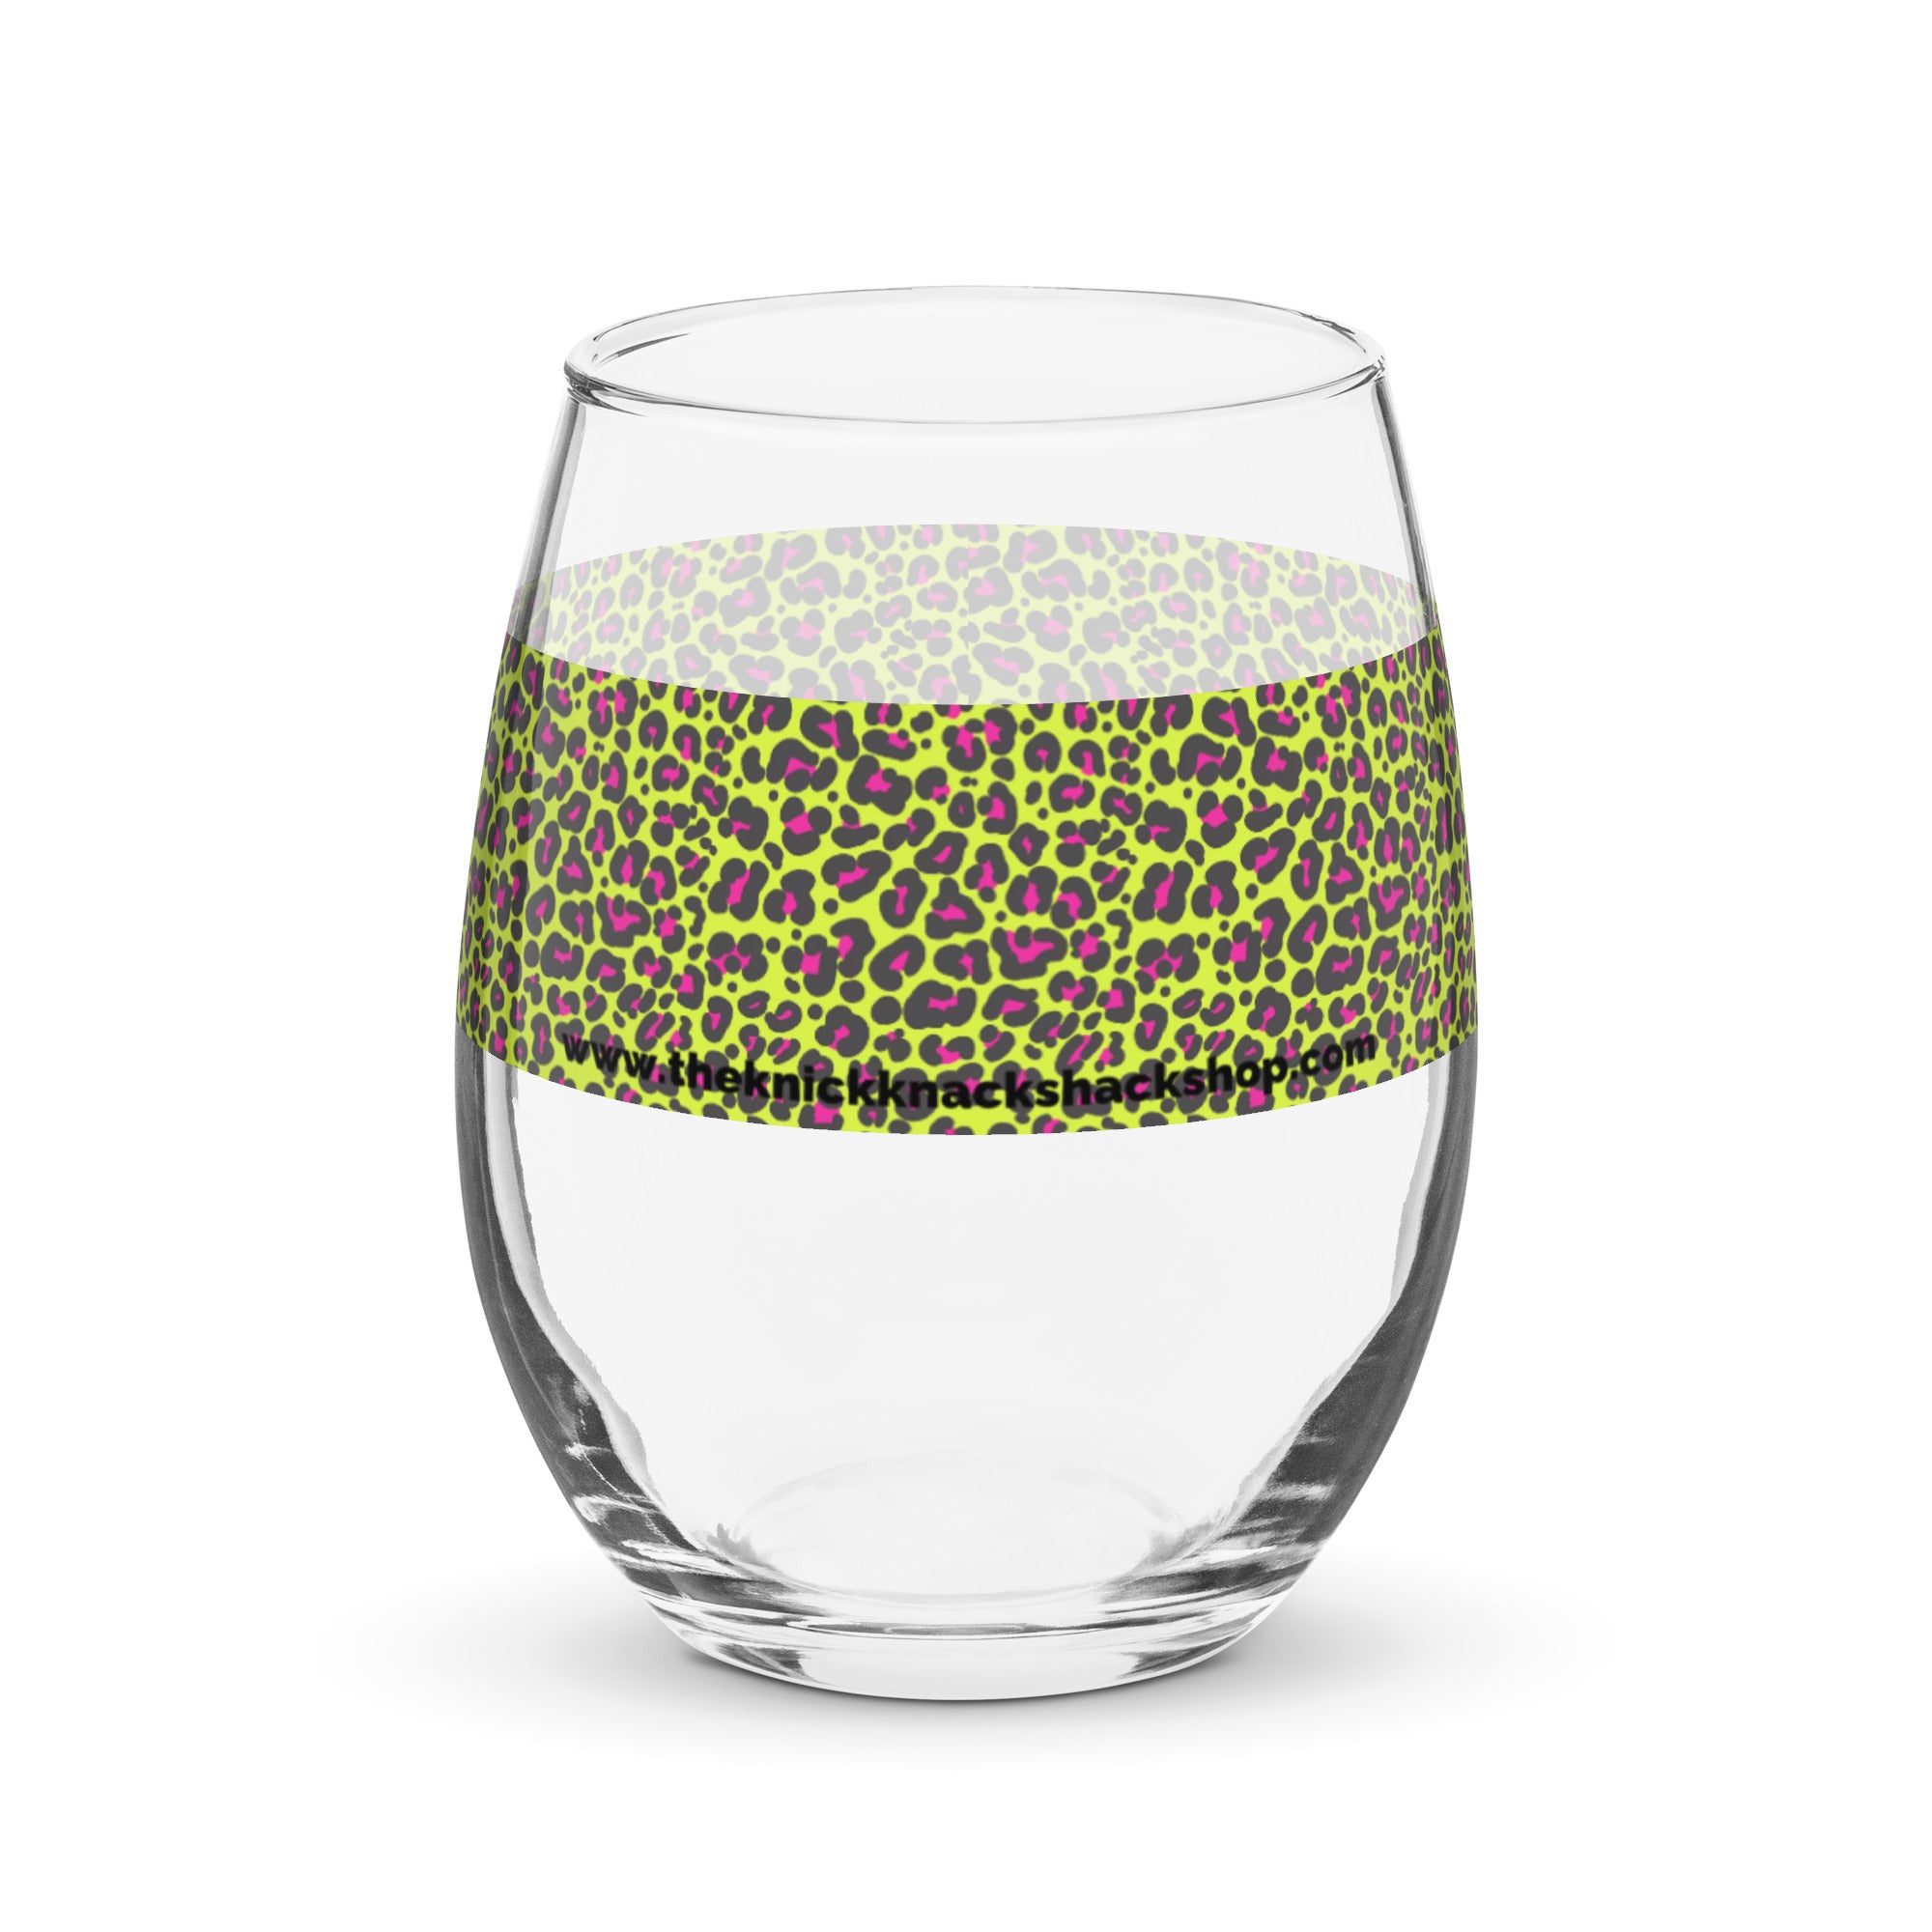 Copa de vino sin tallo (15 oz) - Leopardo de neón